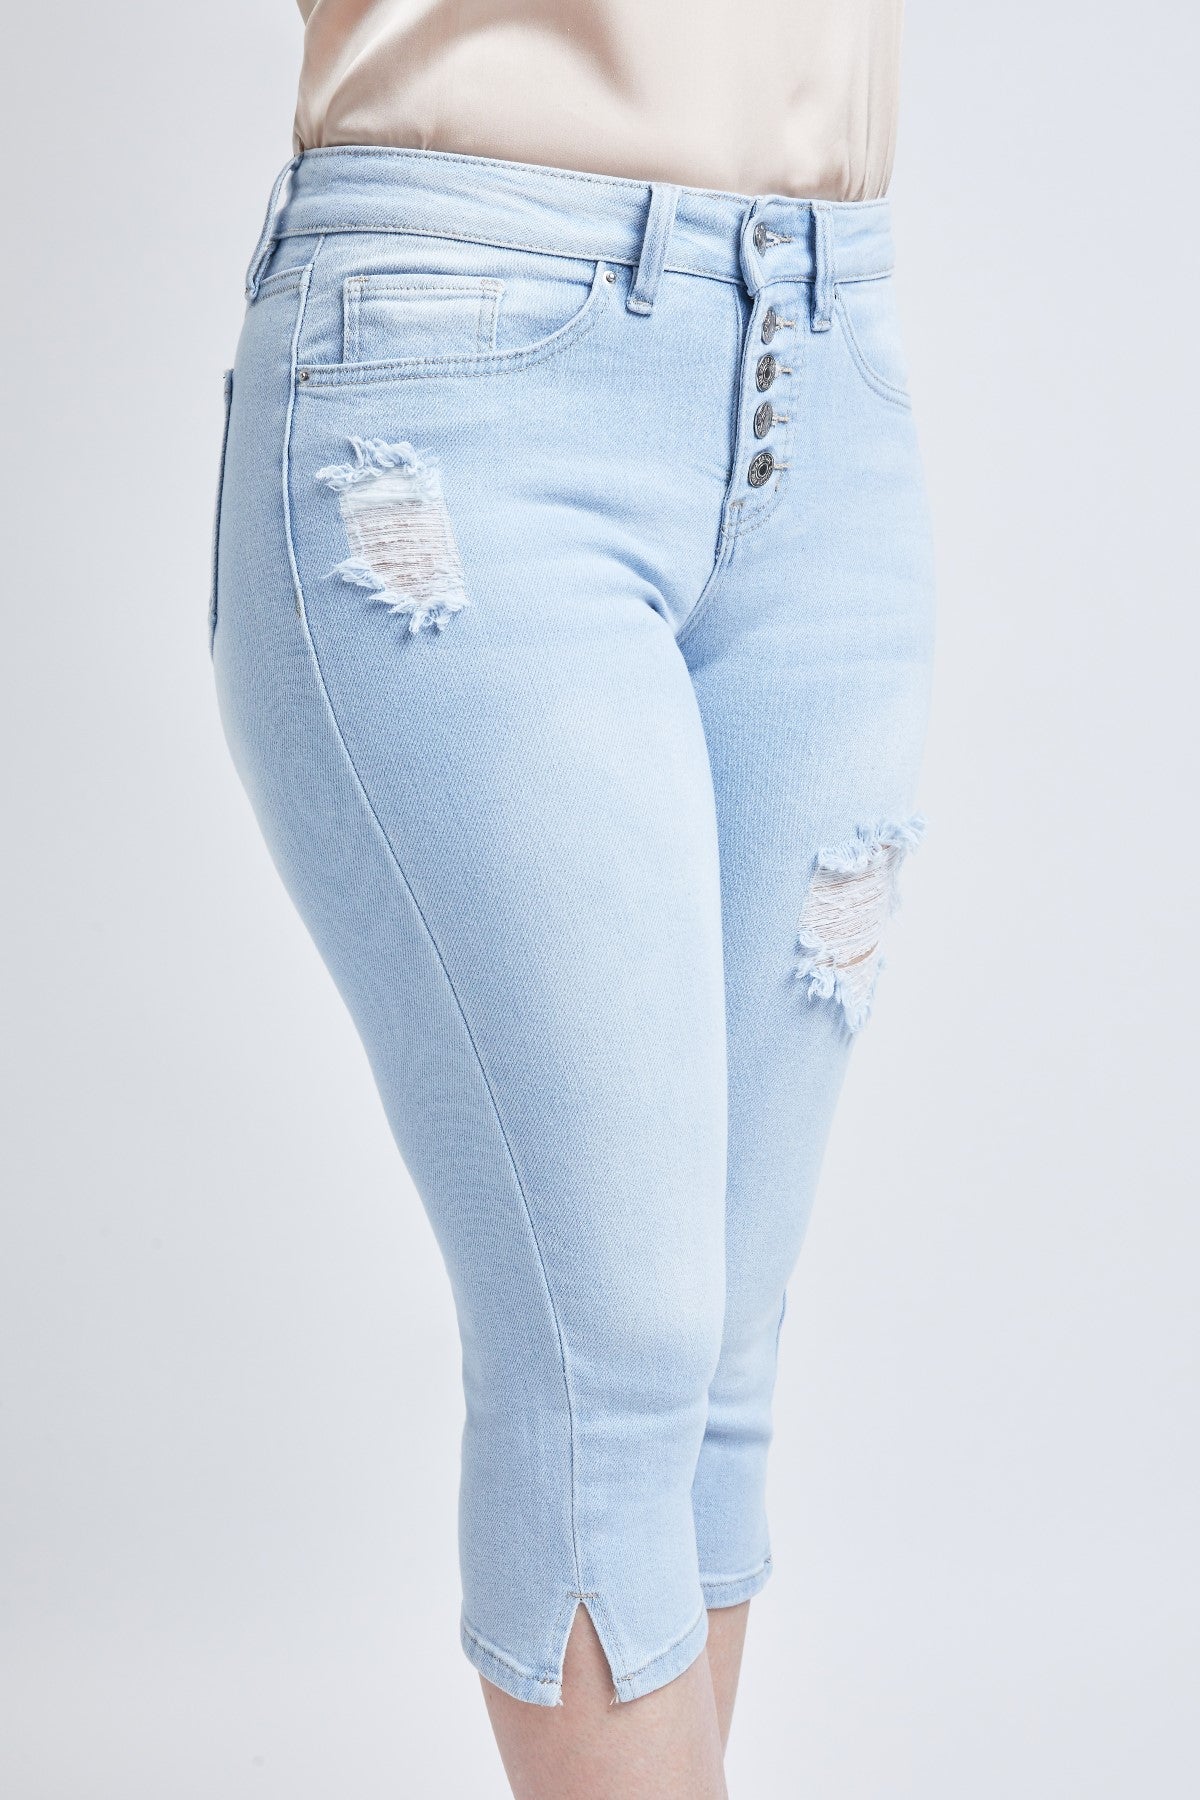 Missy Vintage Exposed Button Capri Jeans With Side Slit Hem12 Pack